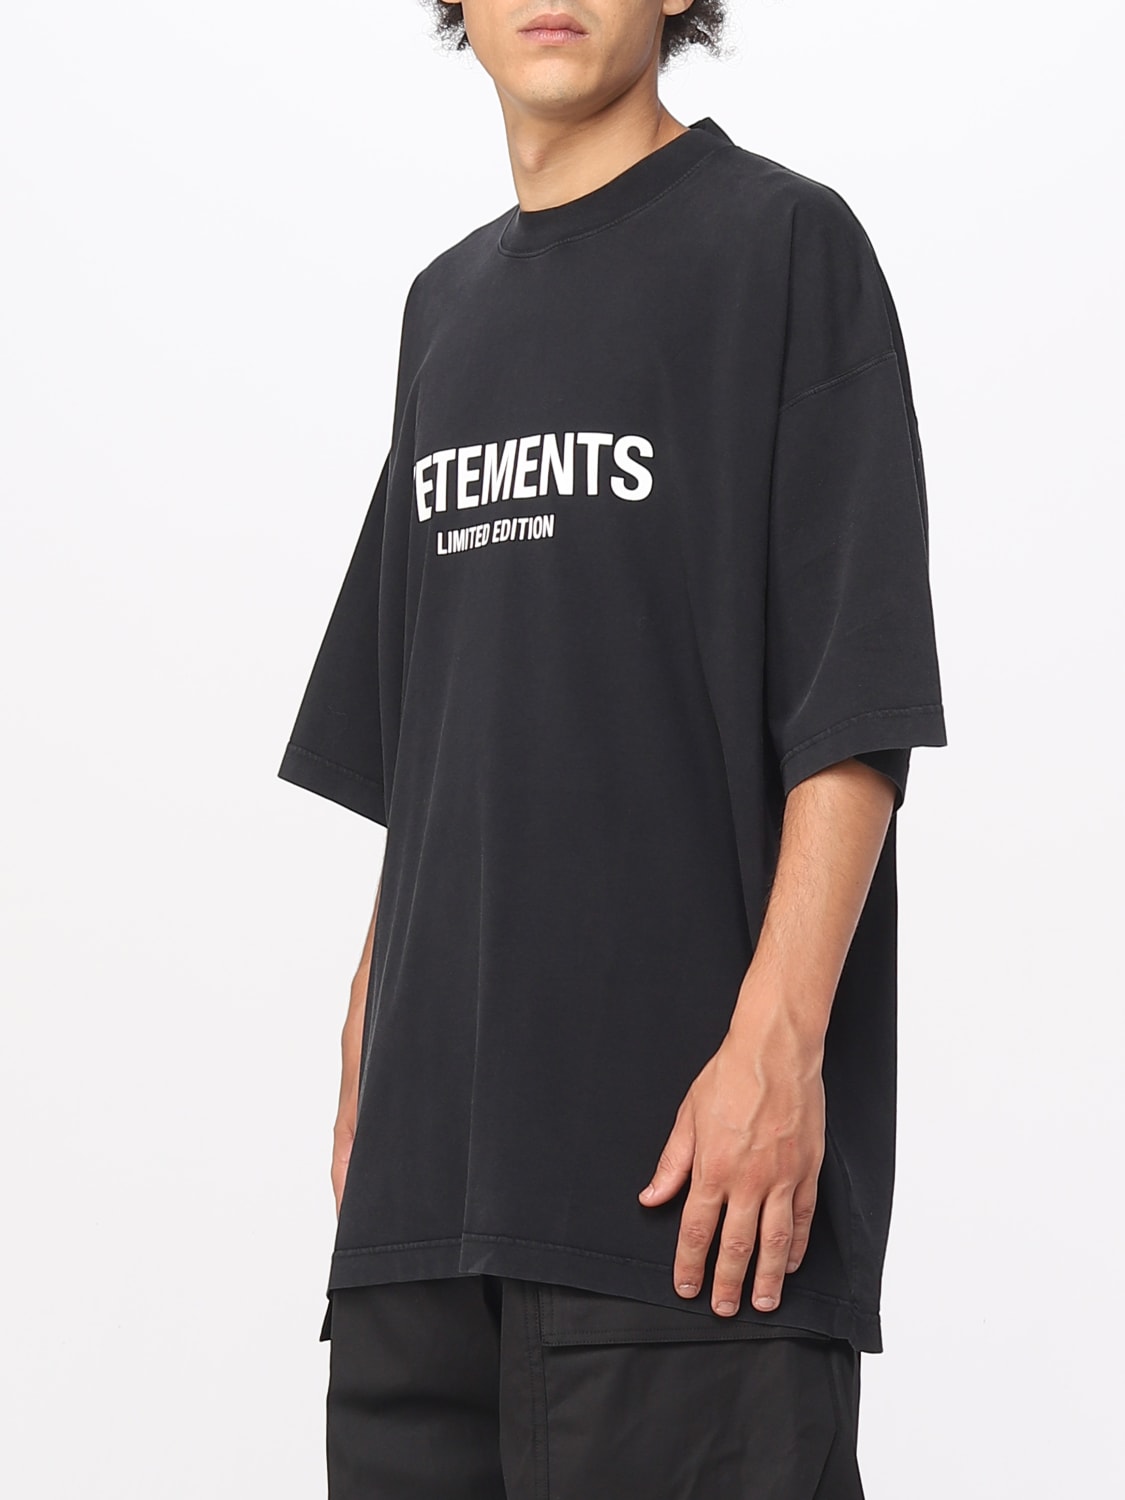 VETEMENTS: t-shirt for man - Black | Vetements t-shirt UE54TR170B1200 ...